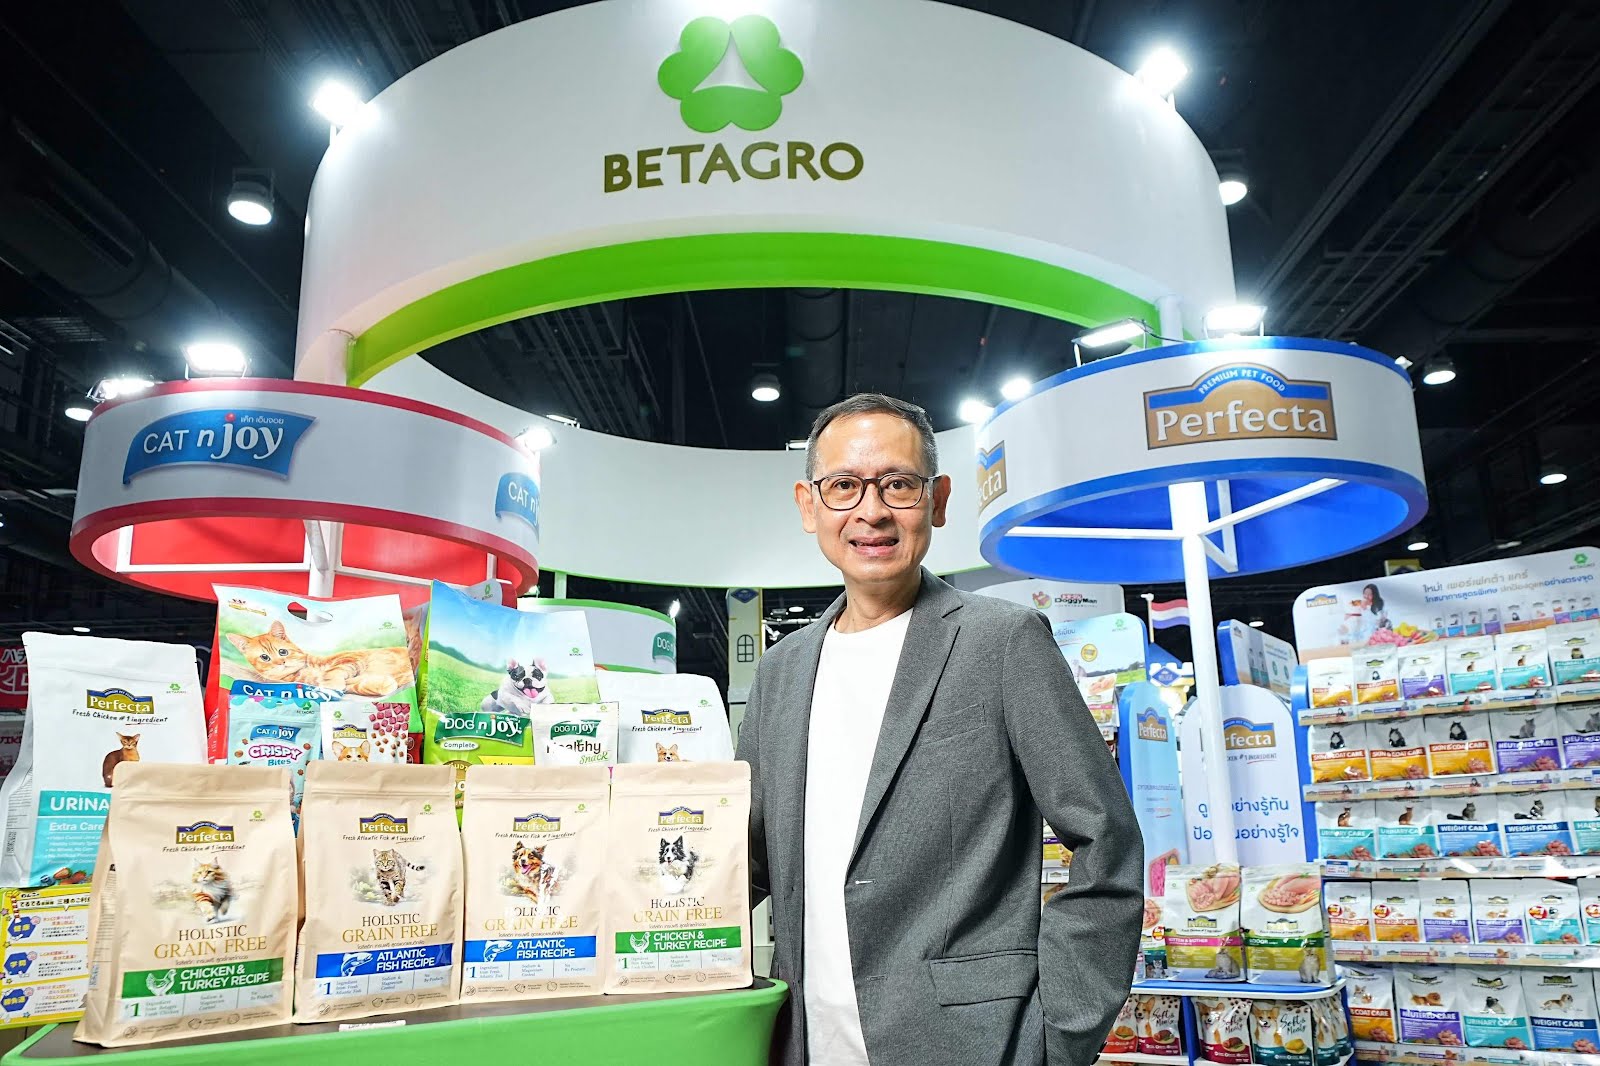 BTG “เบทาโกร” เปิดแผนธุรกิจสัตว์เลี้ยง เดินหน้าขยายกำลังการผลิต ดันพอร์ตสินค้าพรีเมียม พร้อมส่ง Perfecta สูตรใหม่ “Holistic Grain Free” รับตลาดโต 10% ต่อเนื่อง